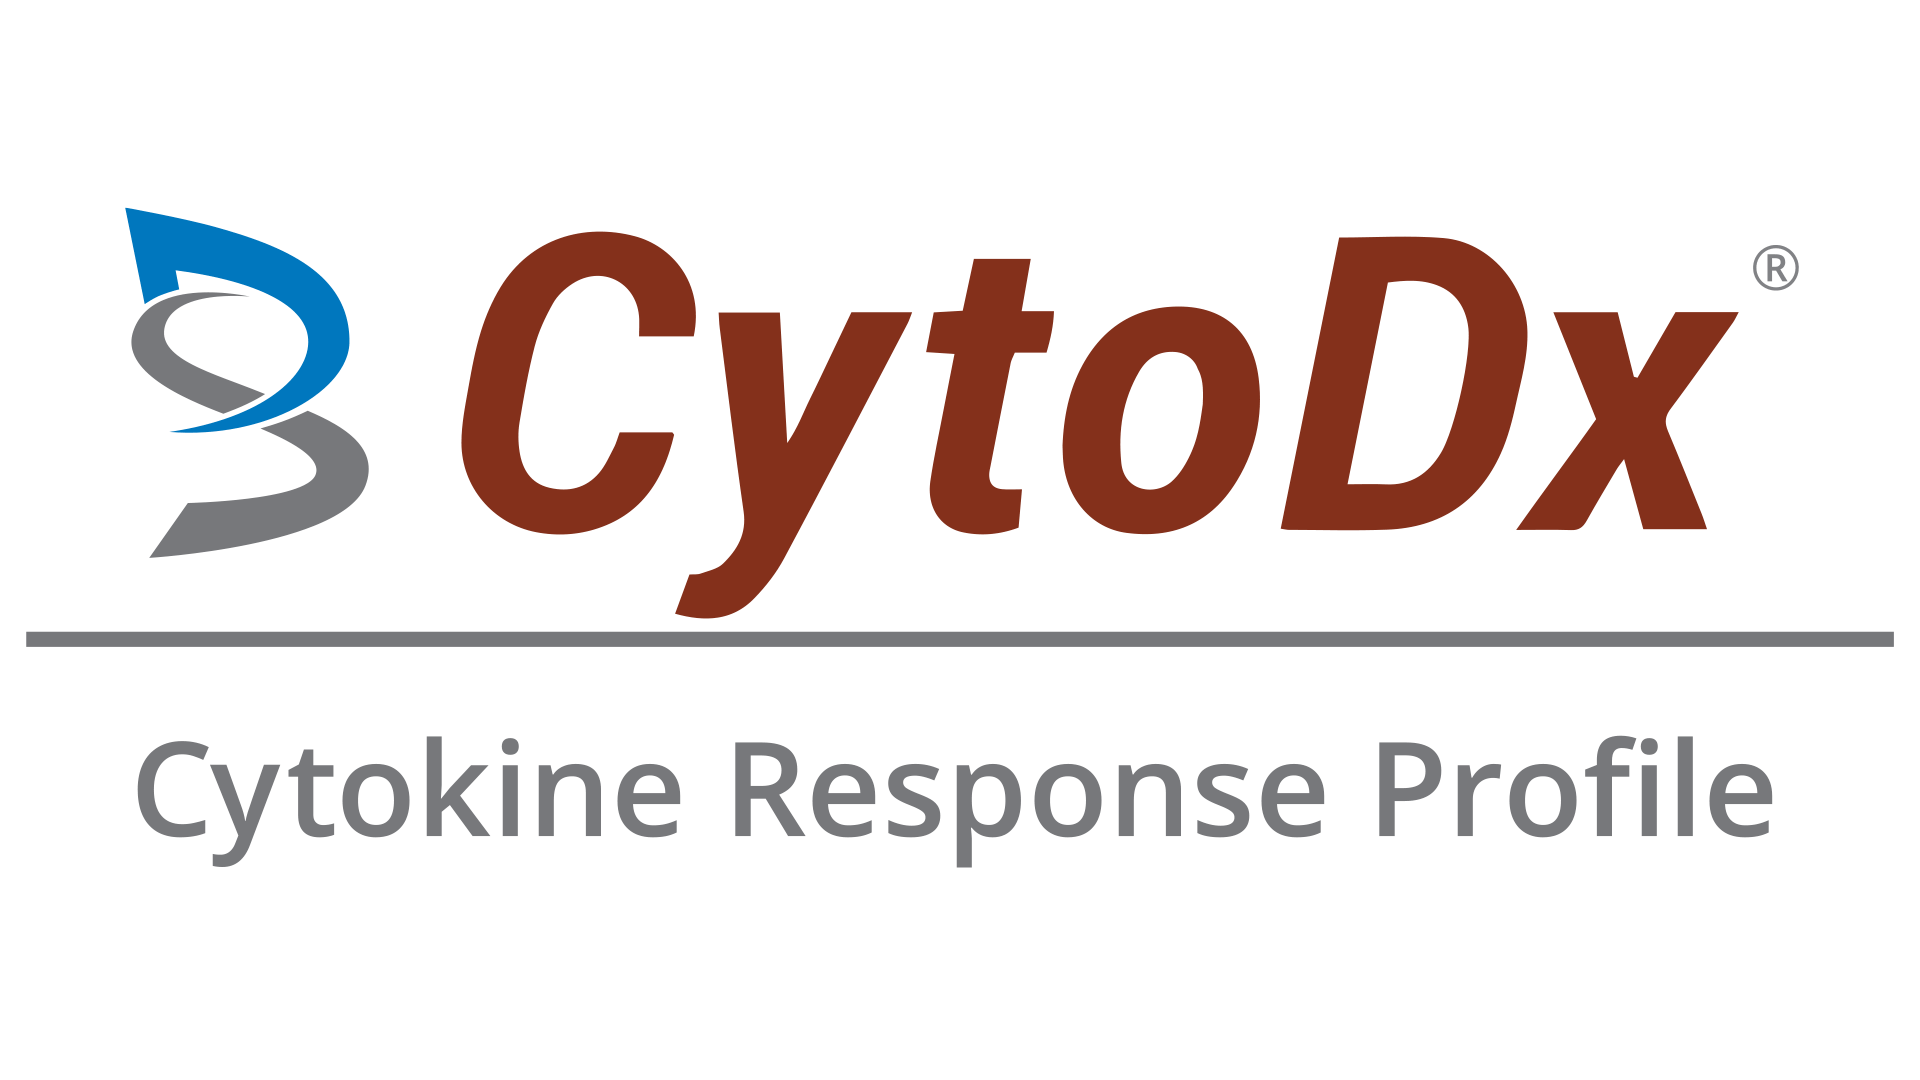 CytoDx